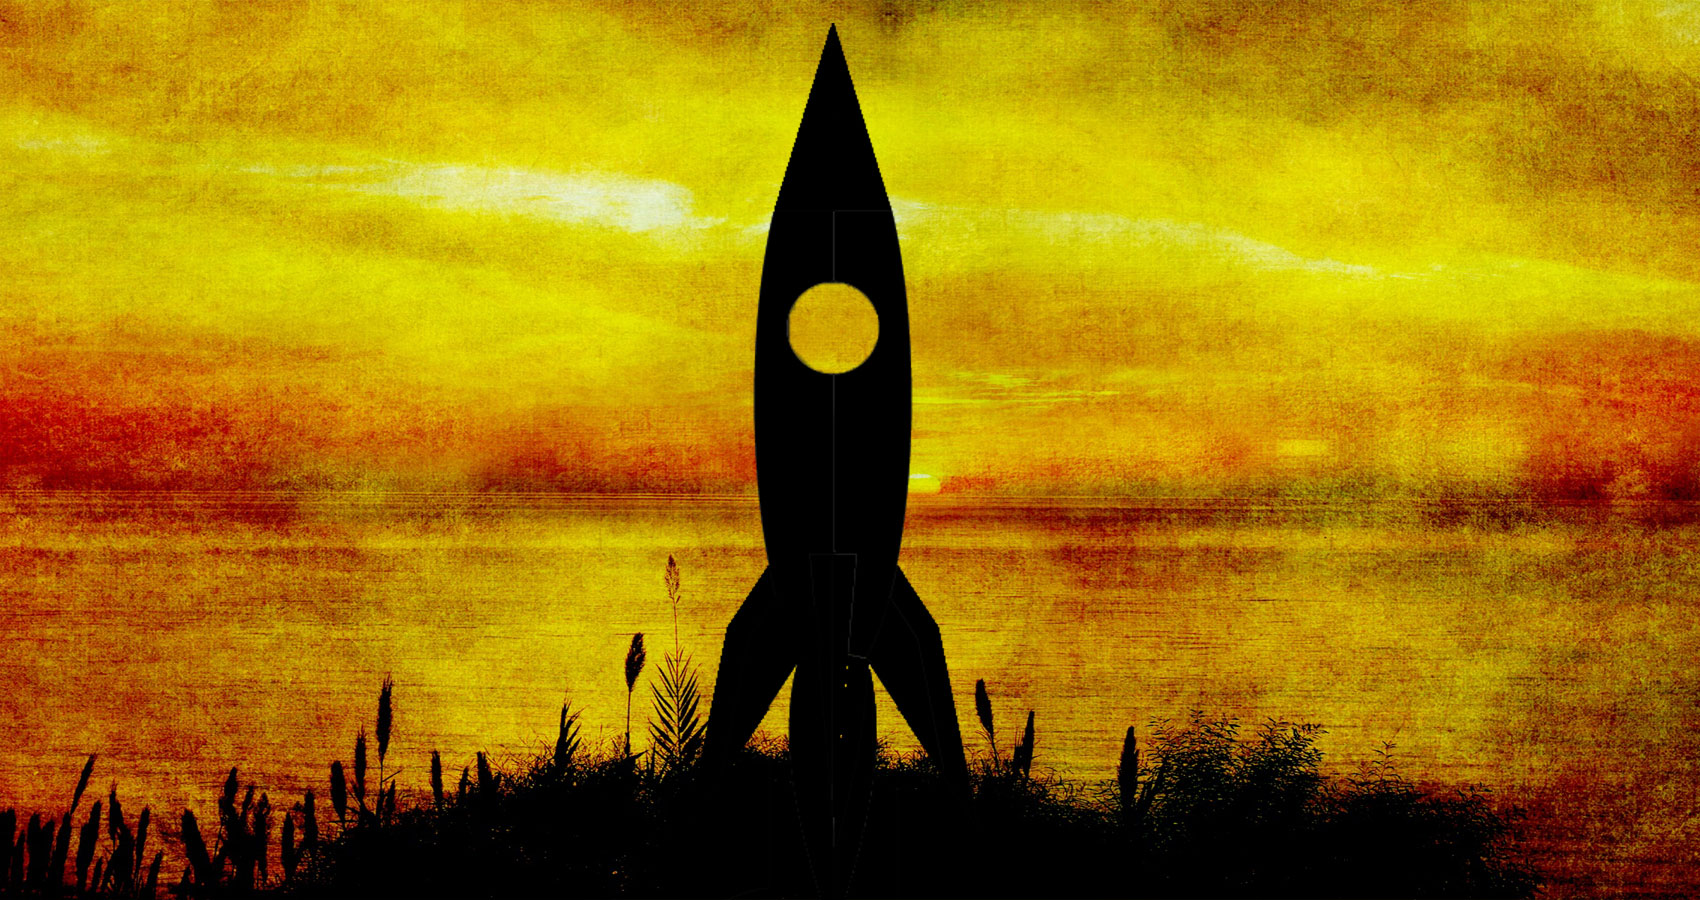 Make Believe Rocket, written by James D. Casey IV at Spillwords.com